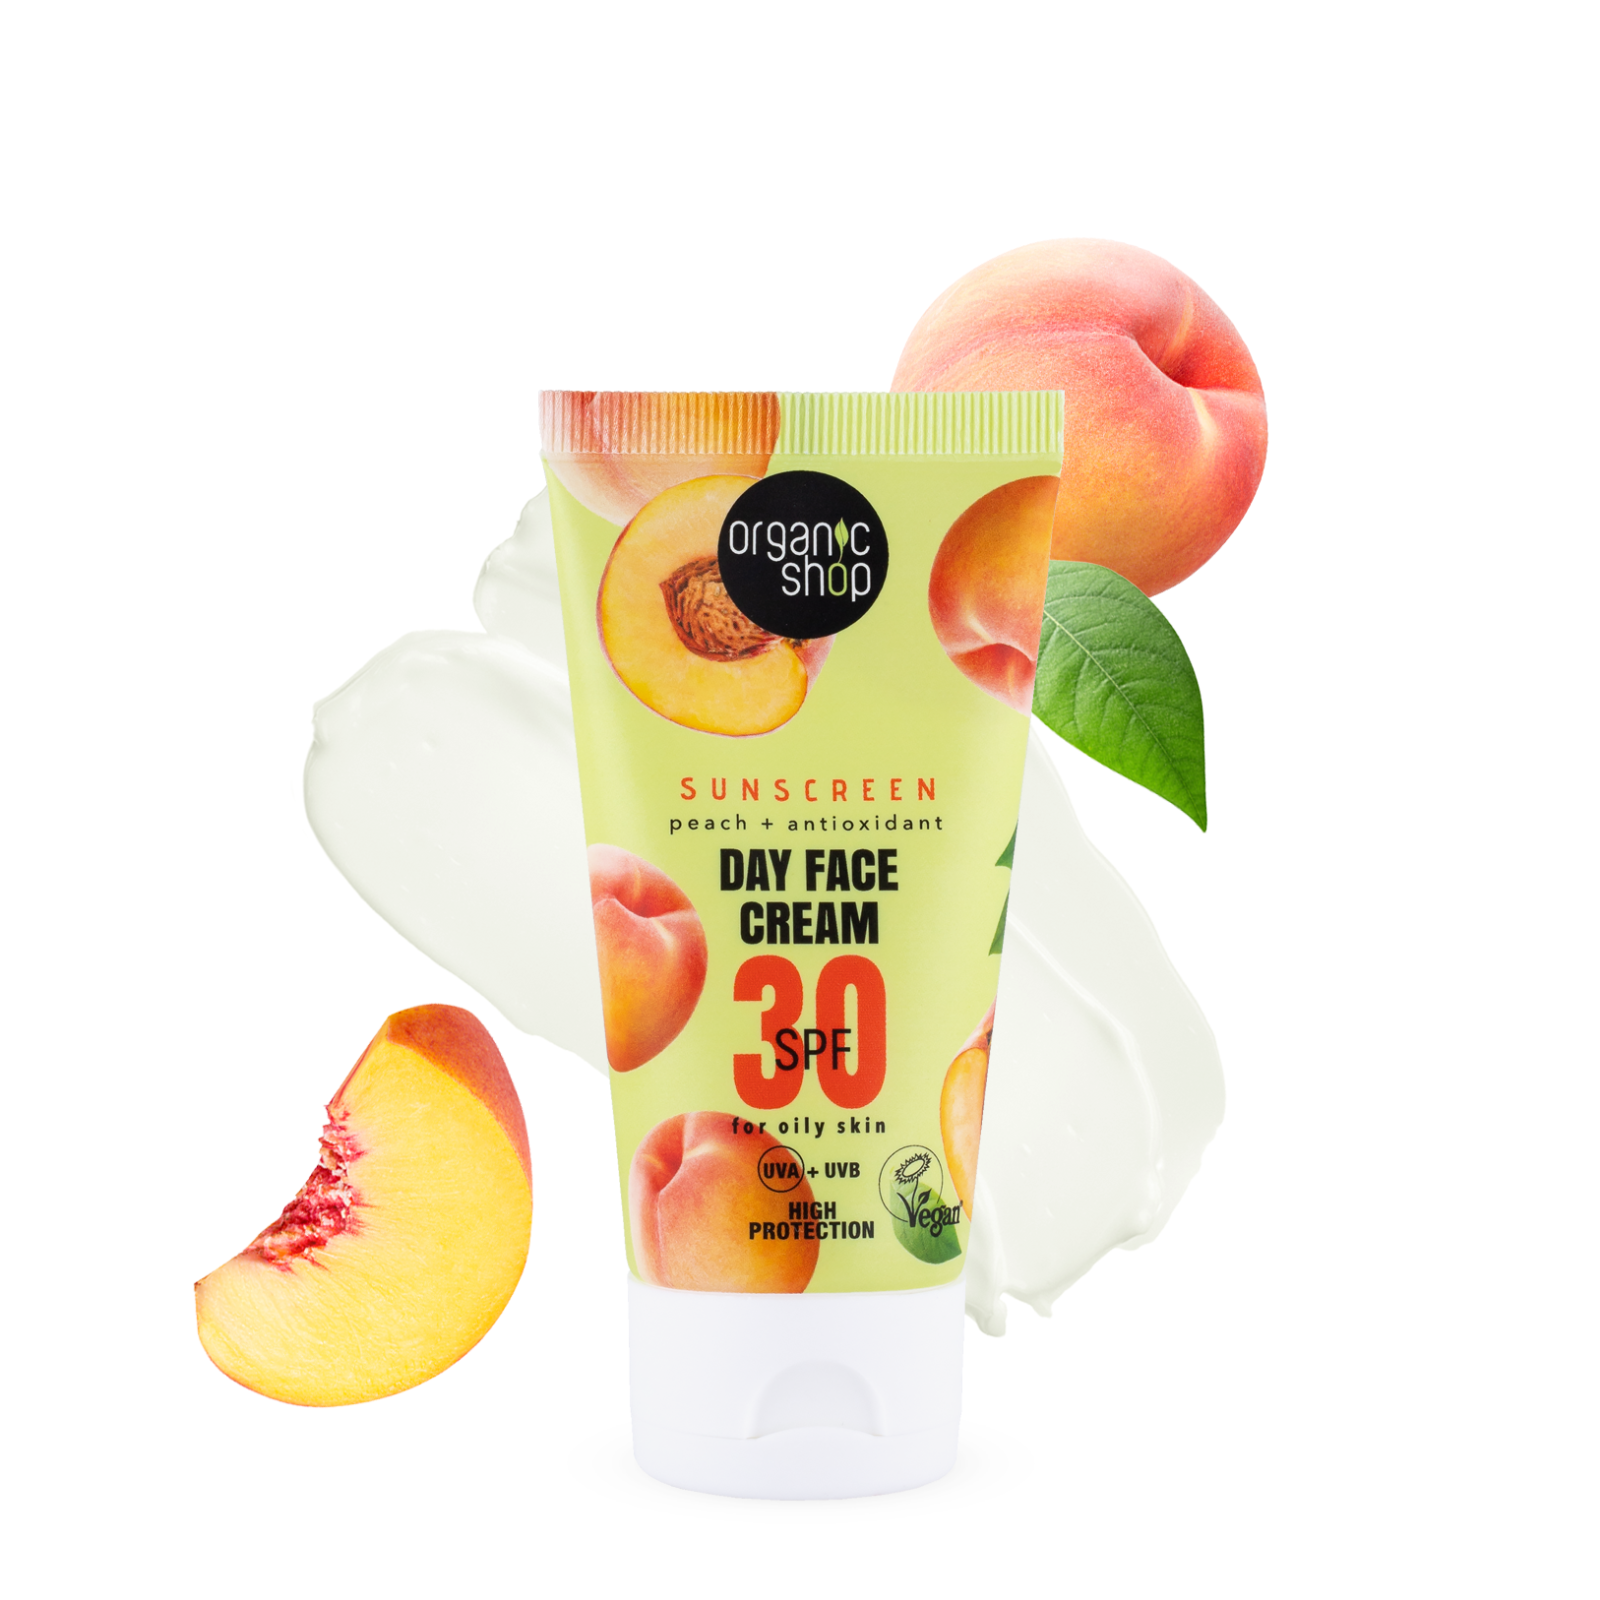 Organic Shop Sunscreen Day Face Cream 30 SPF Oily skin (50ml)